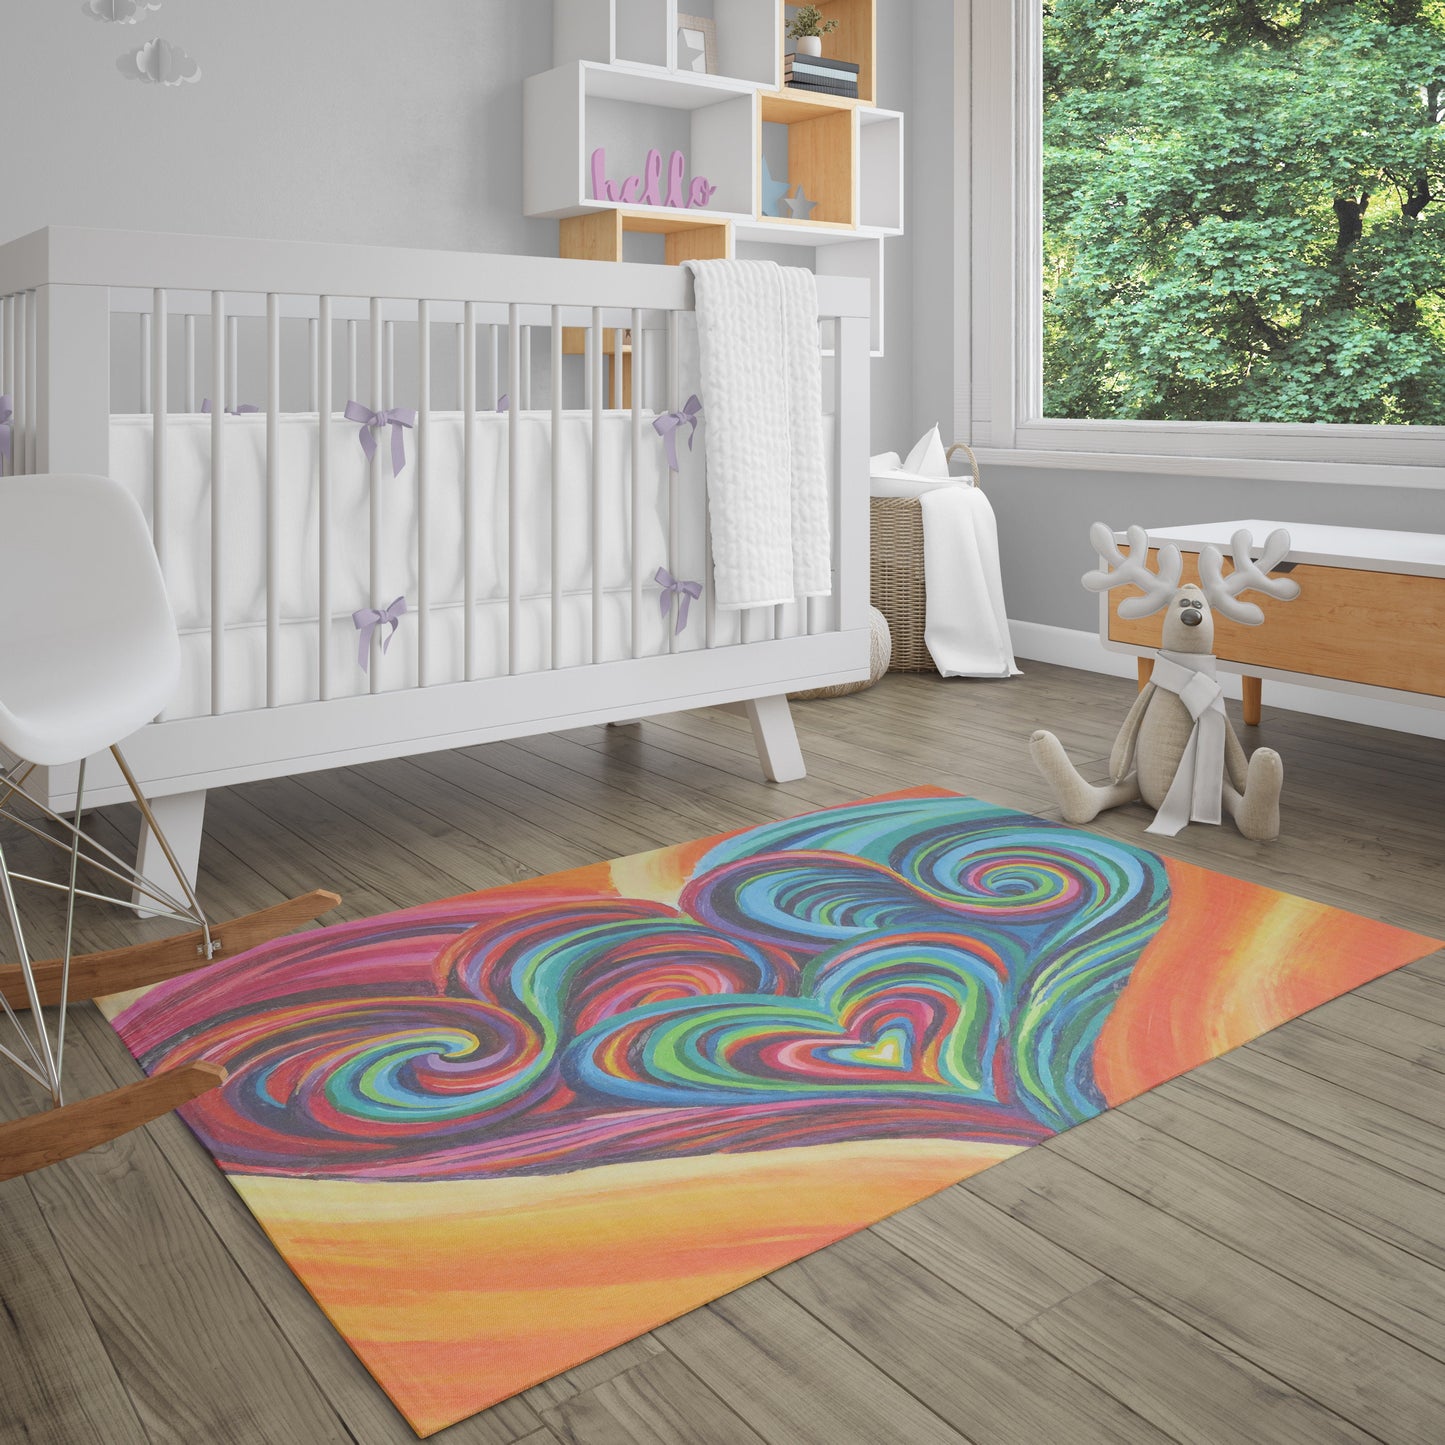 Heart Rug Rainbow Hearts Rug colorful Rug kids Floor Rug 4x6 5x7 8x10 Large rugs nursery rugs